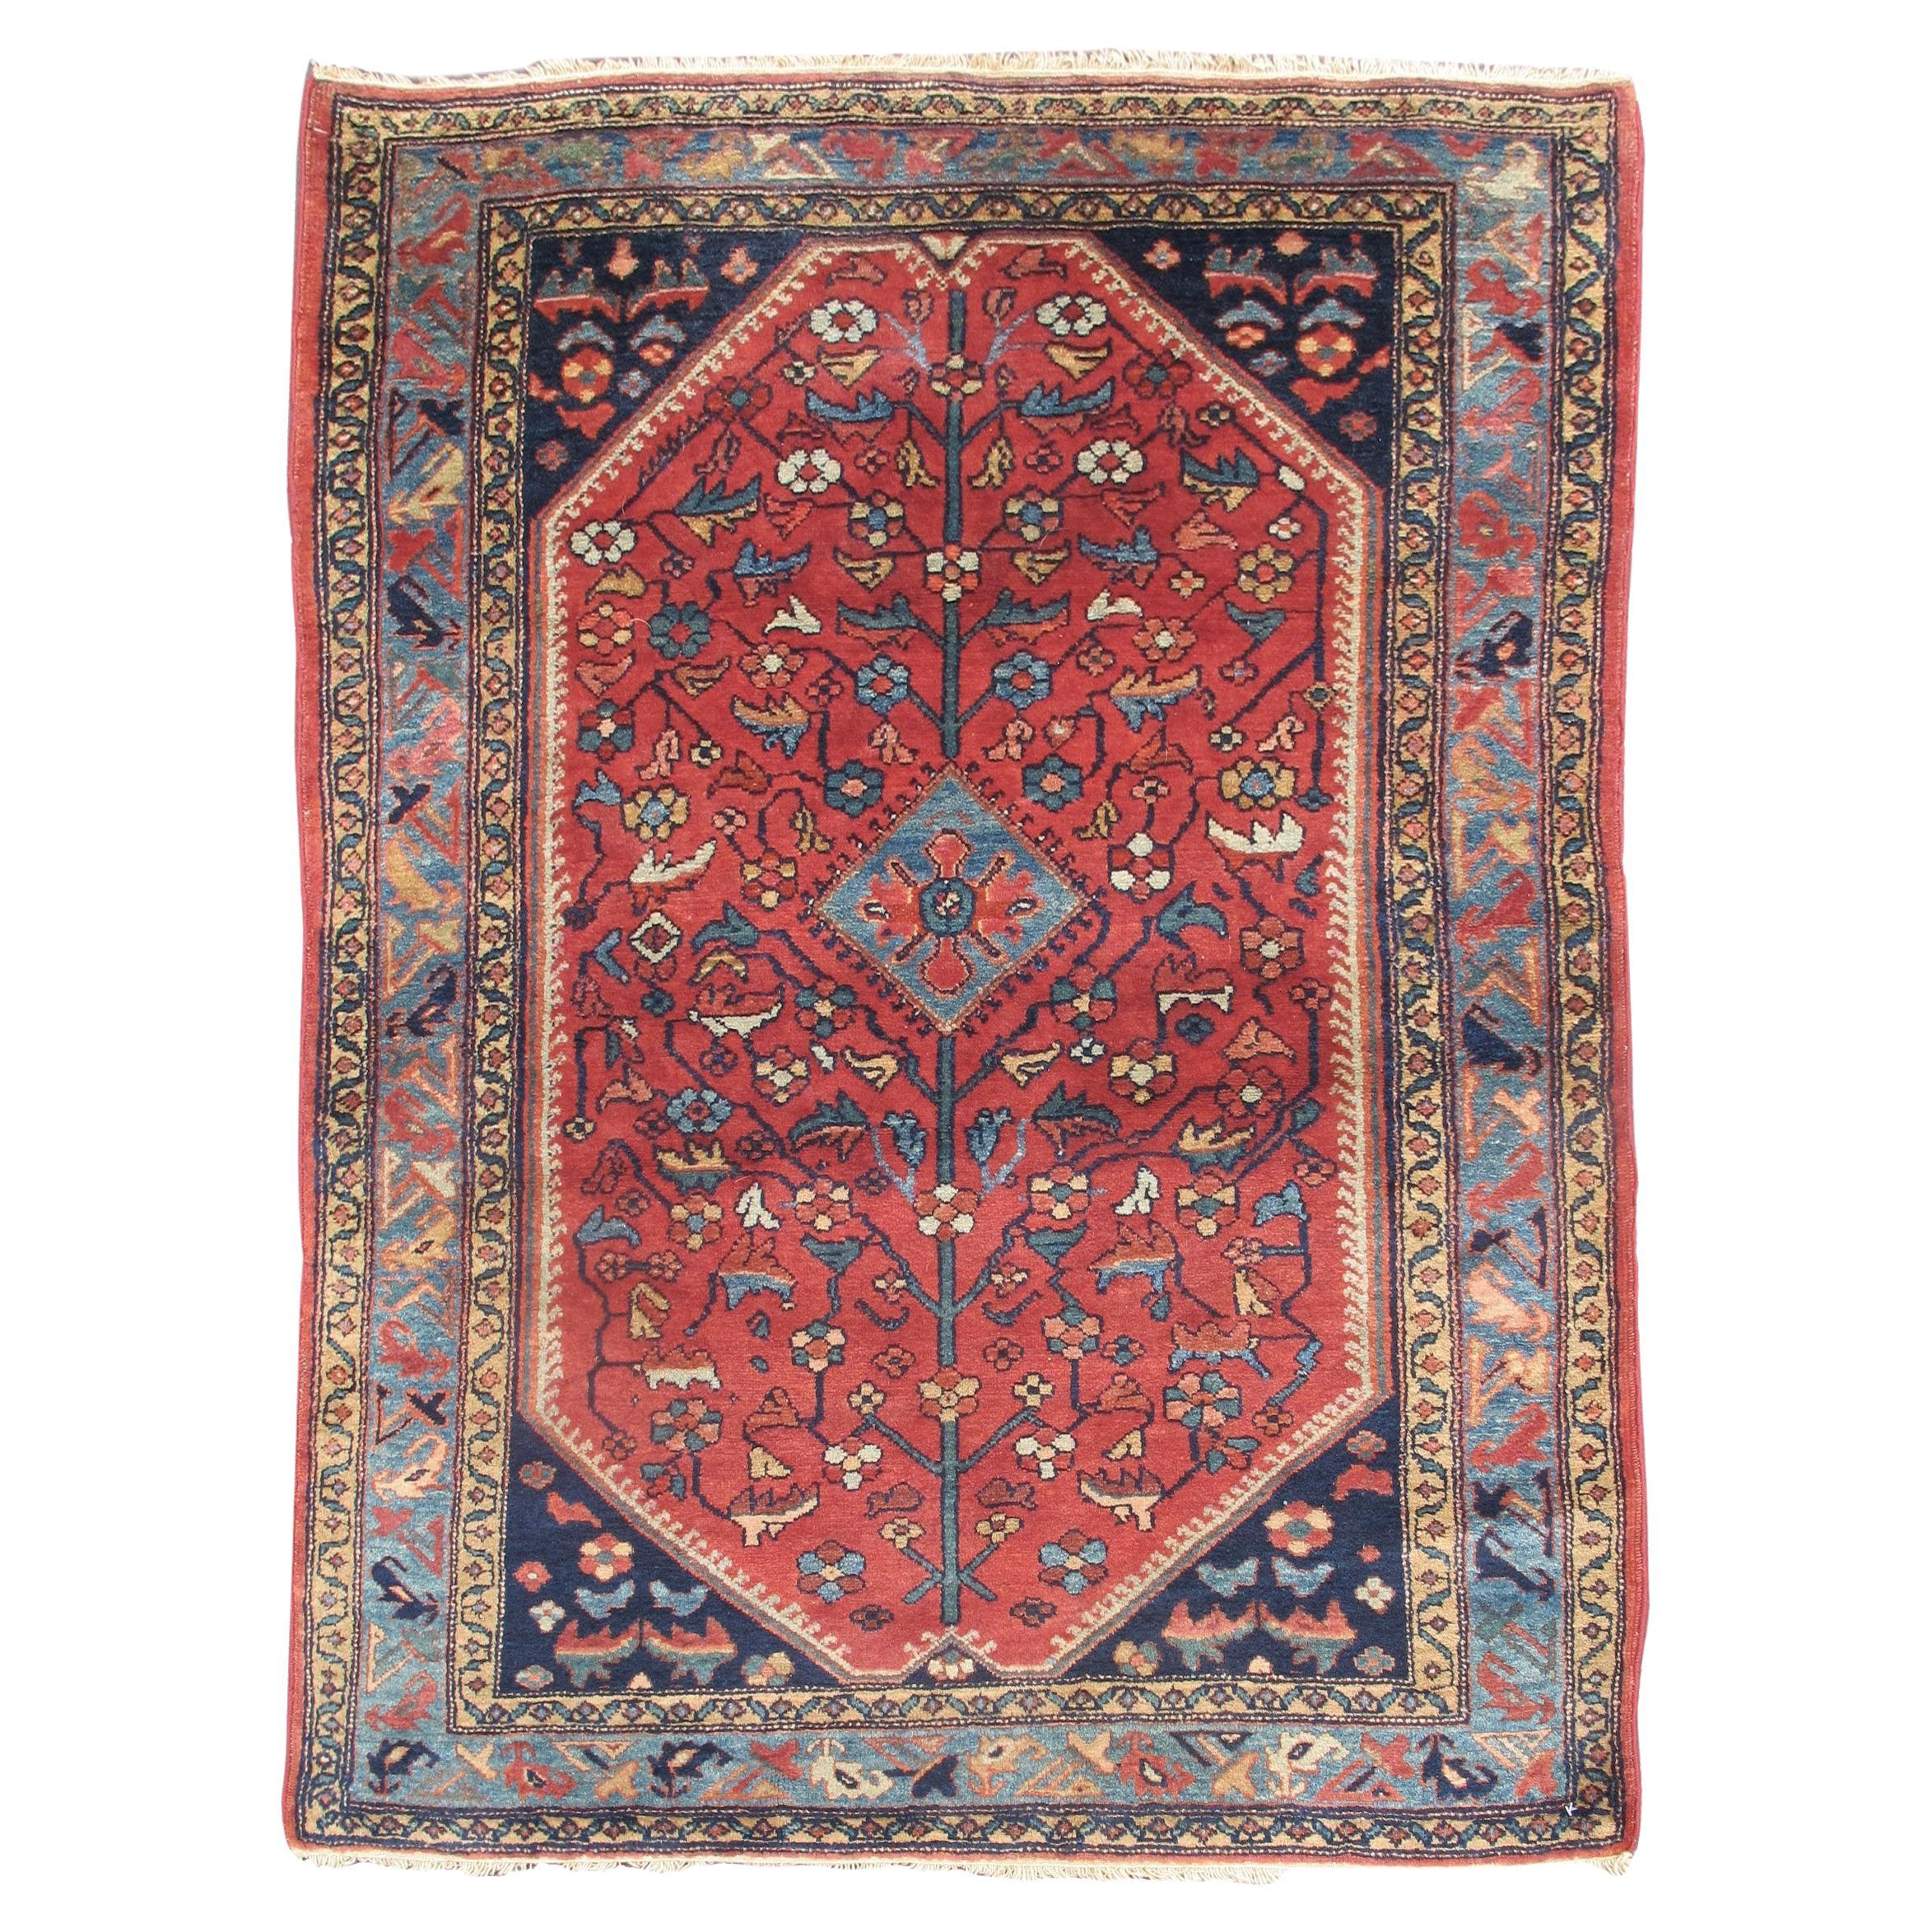 Antique Persian Lillihan Rug, c. 1900